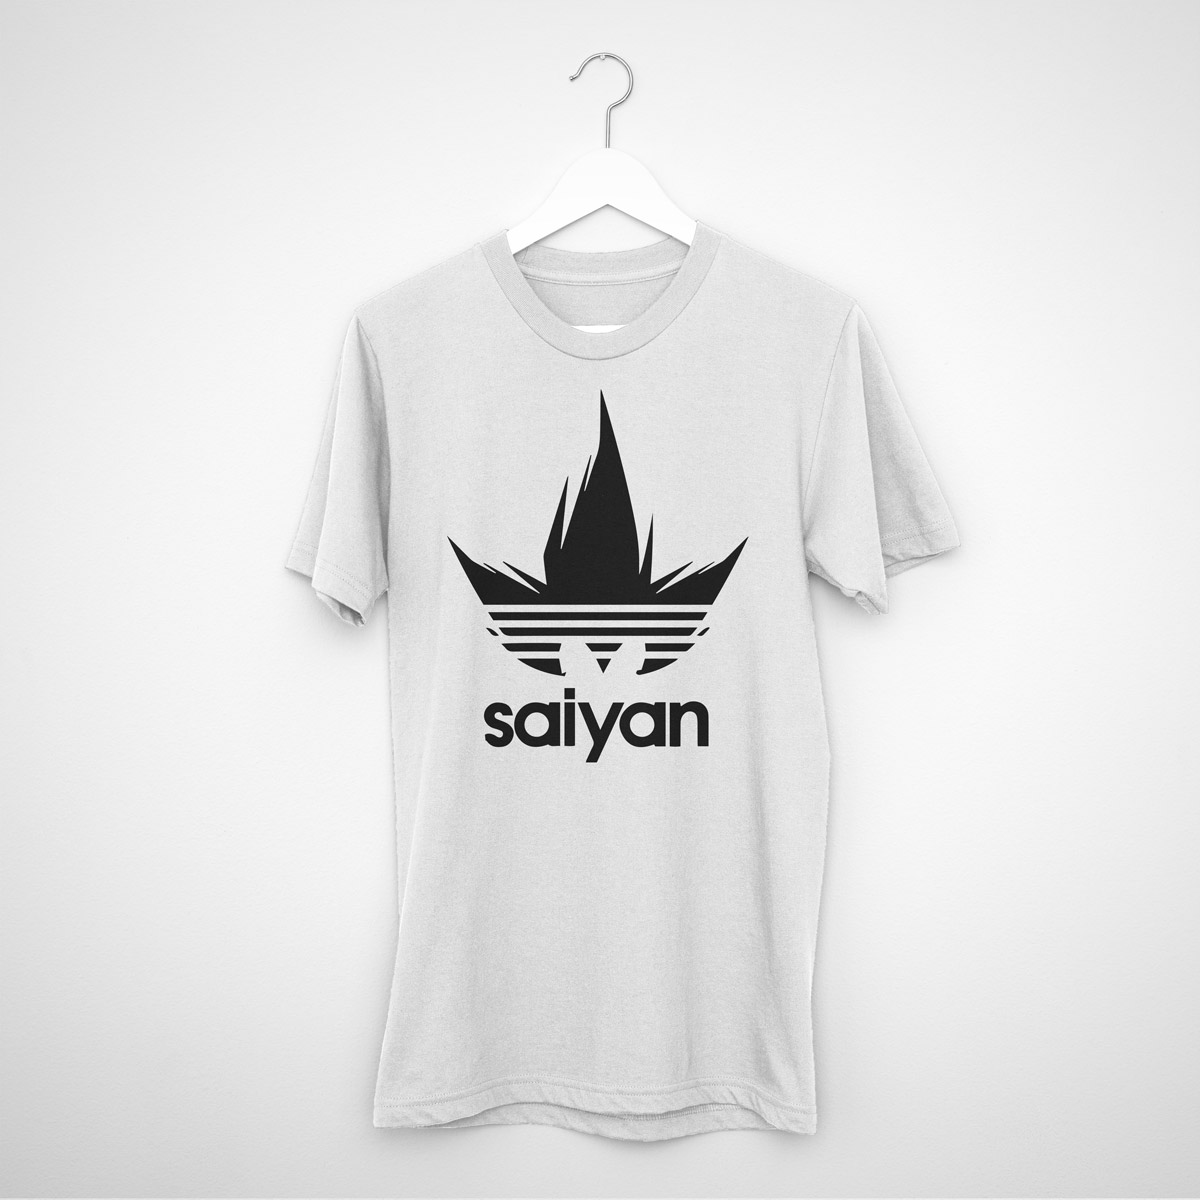 Saiyan Adidas / Dragon Ball Z Parody T-Shirt